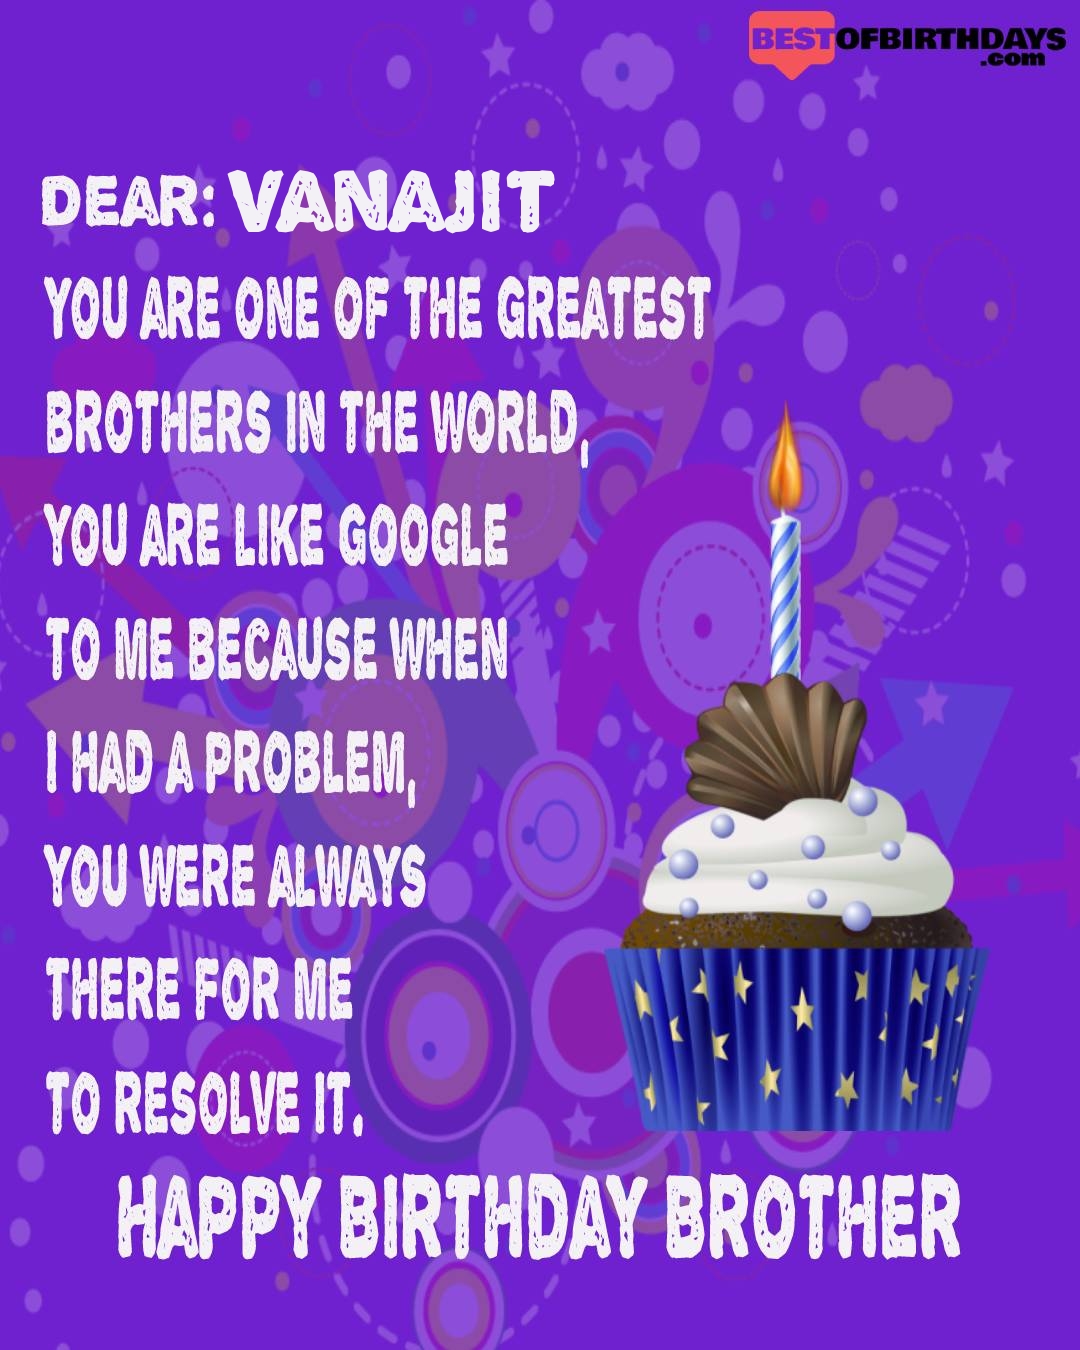 Happy birthday vanajit bhai brother bro